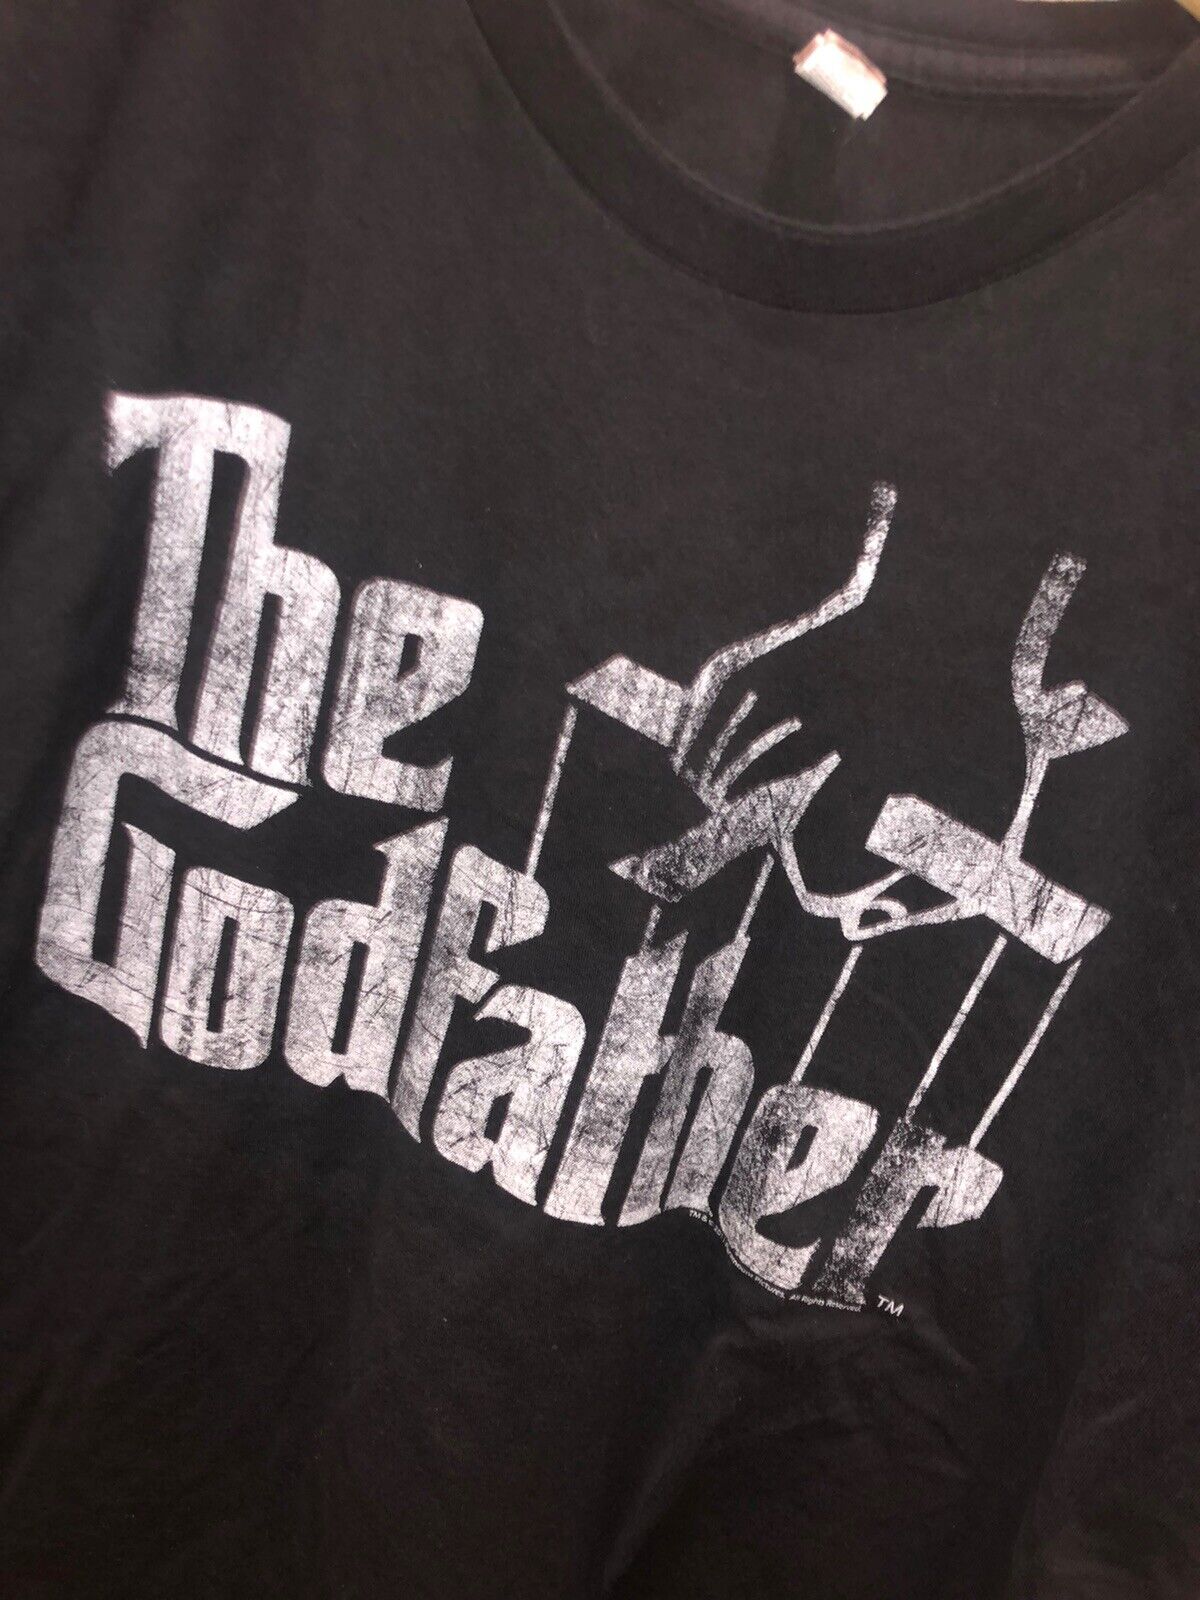 THE GODFATHER T-Shirt SIZE Xl Movie Memorabilia Men's Collectible T-Shirt